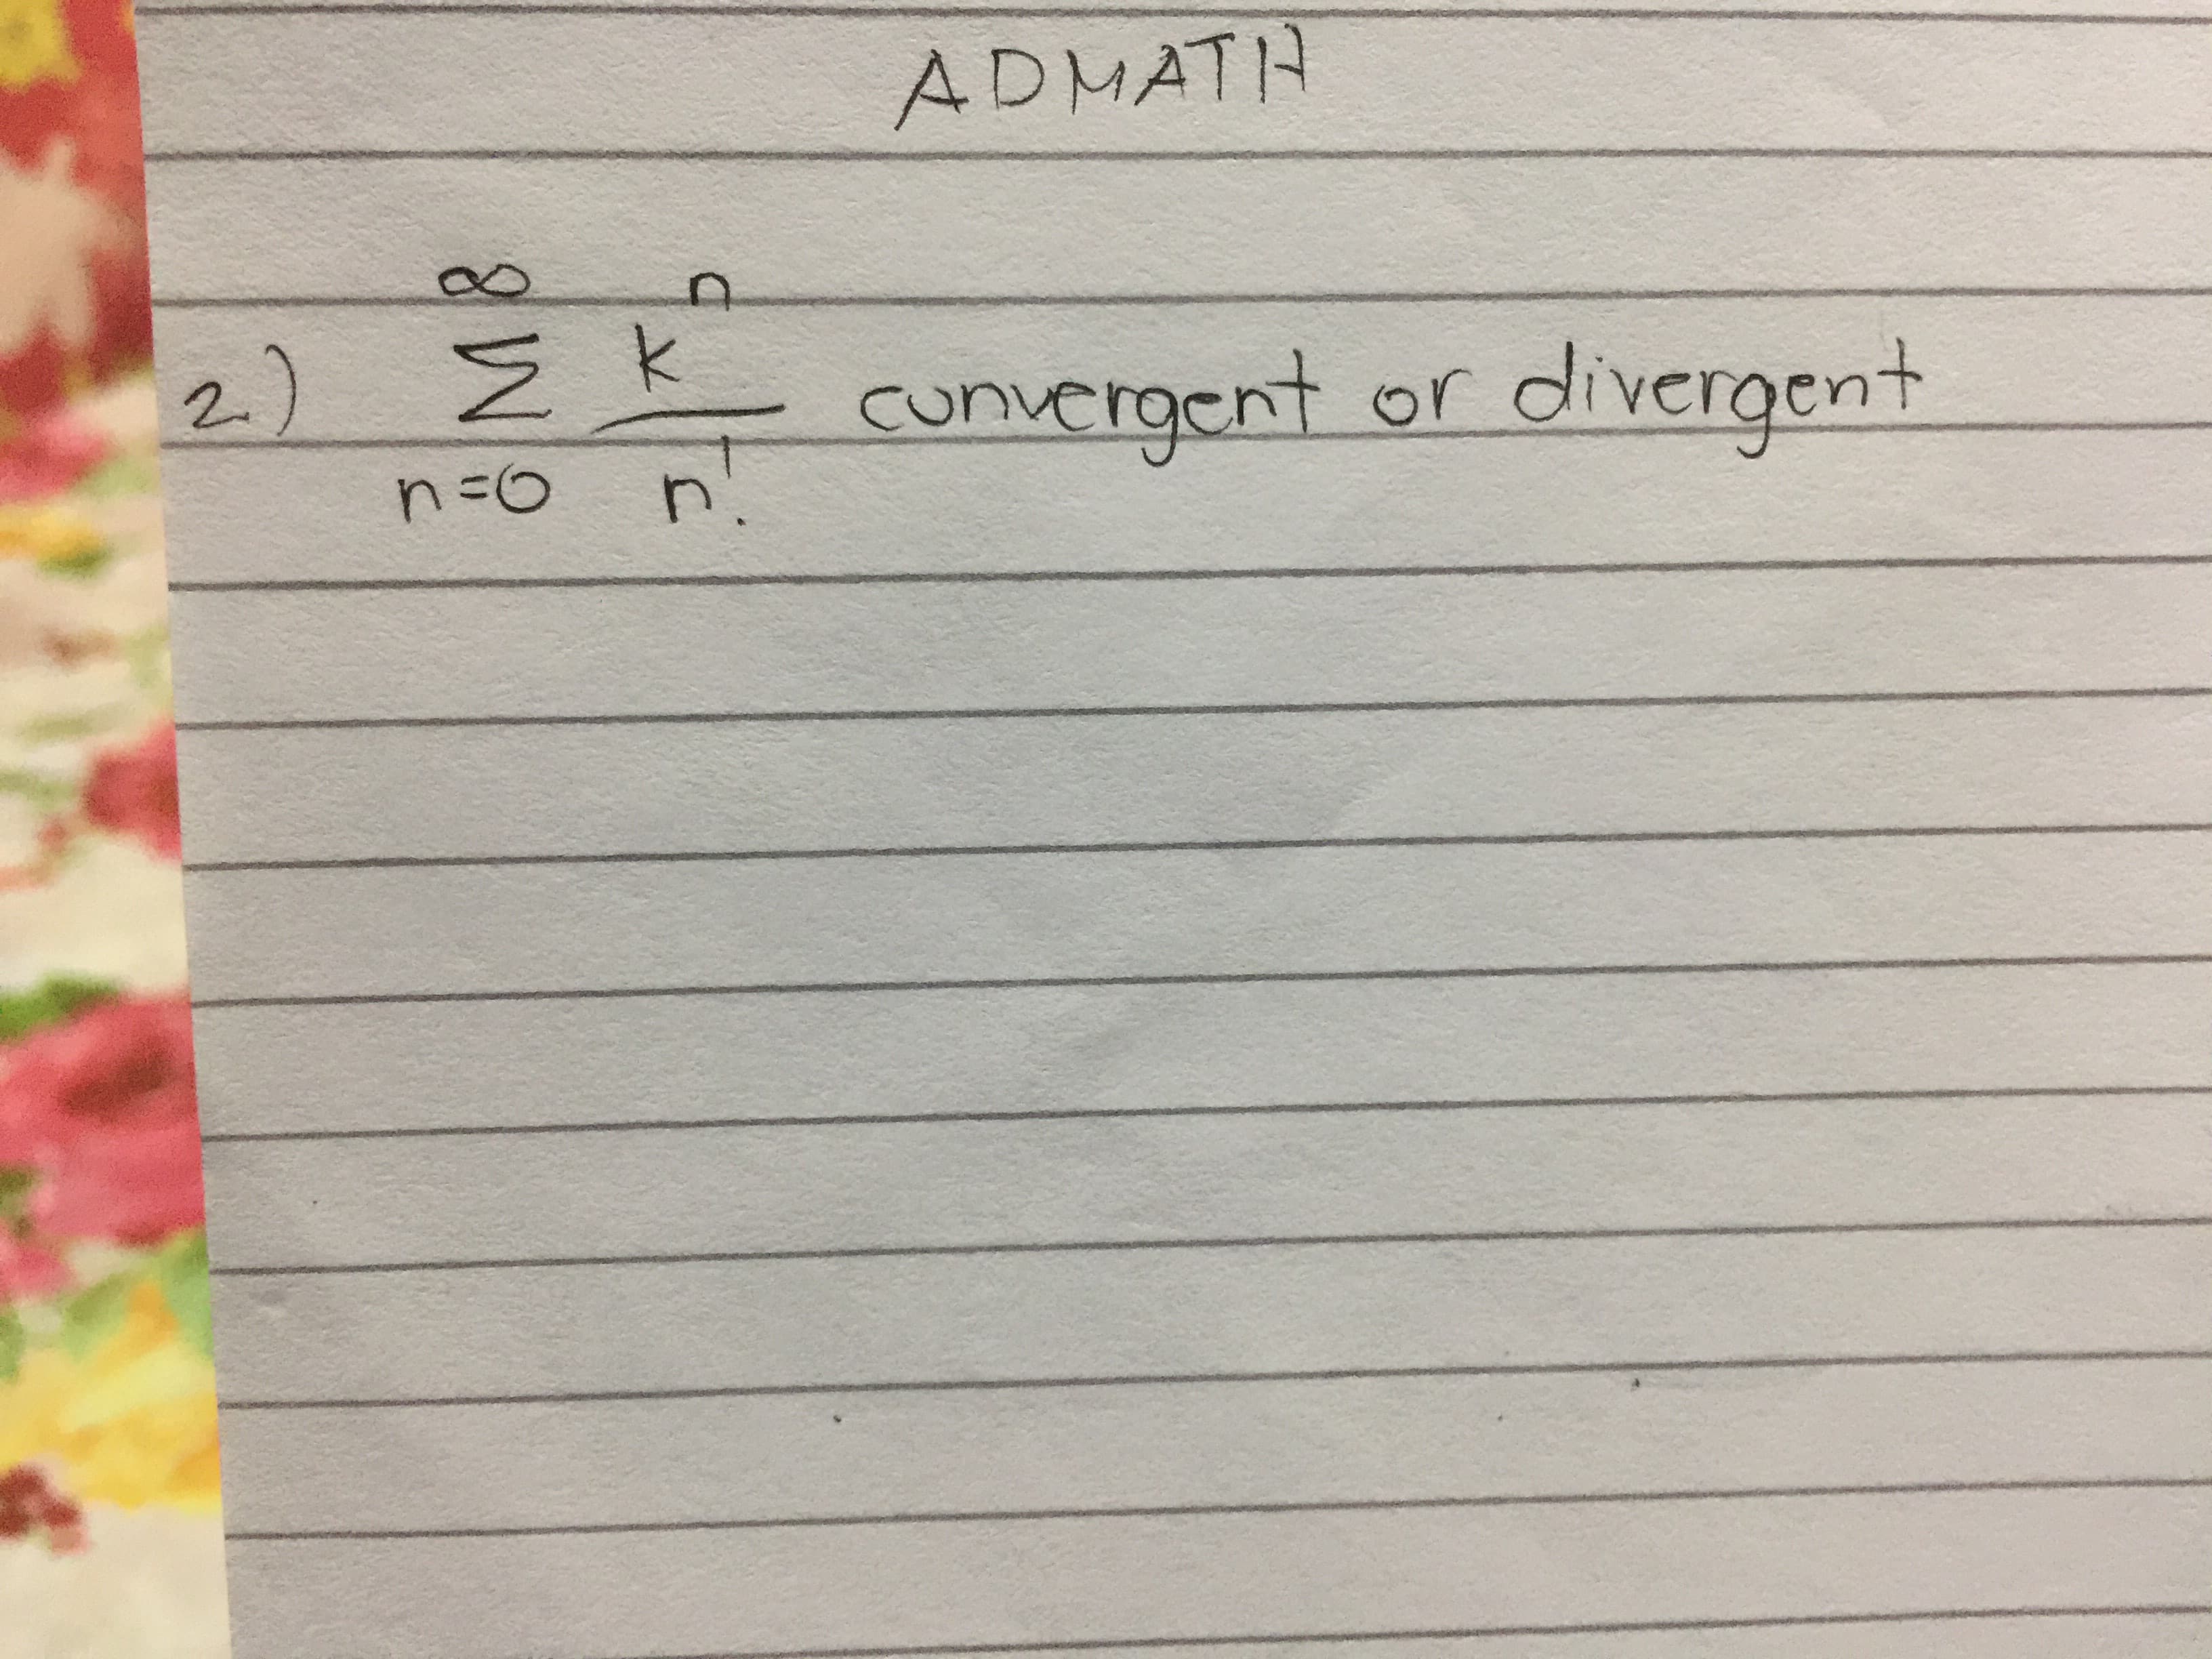 ADMATH
8.
2.)
cunvergent
n.
divergent
or
n=0
